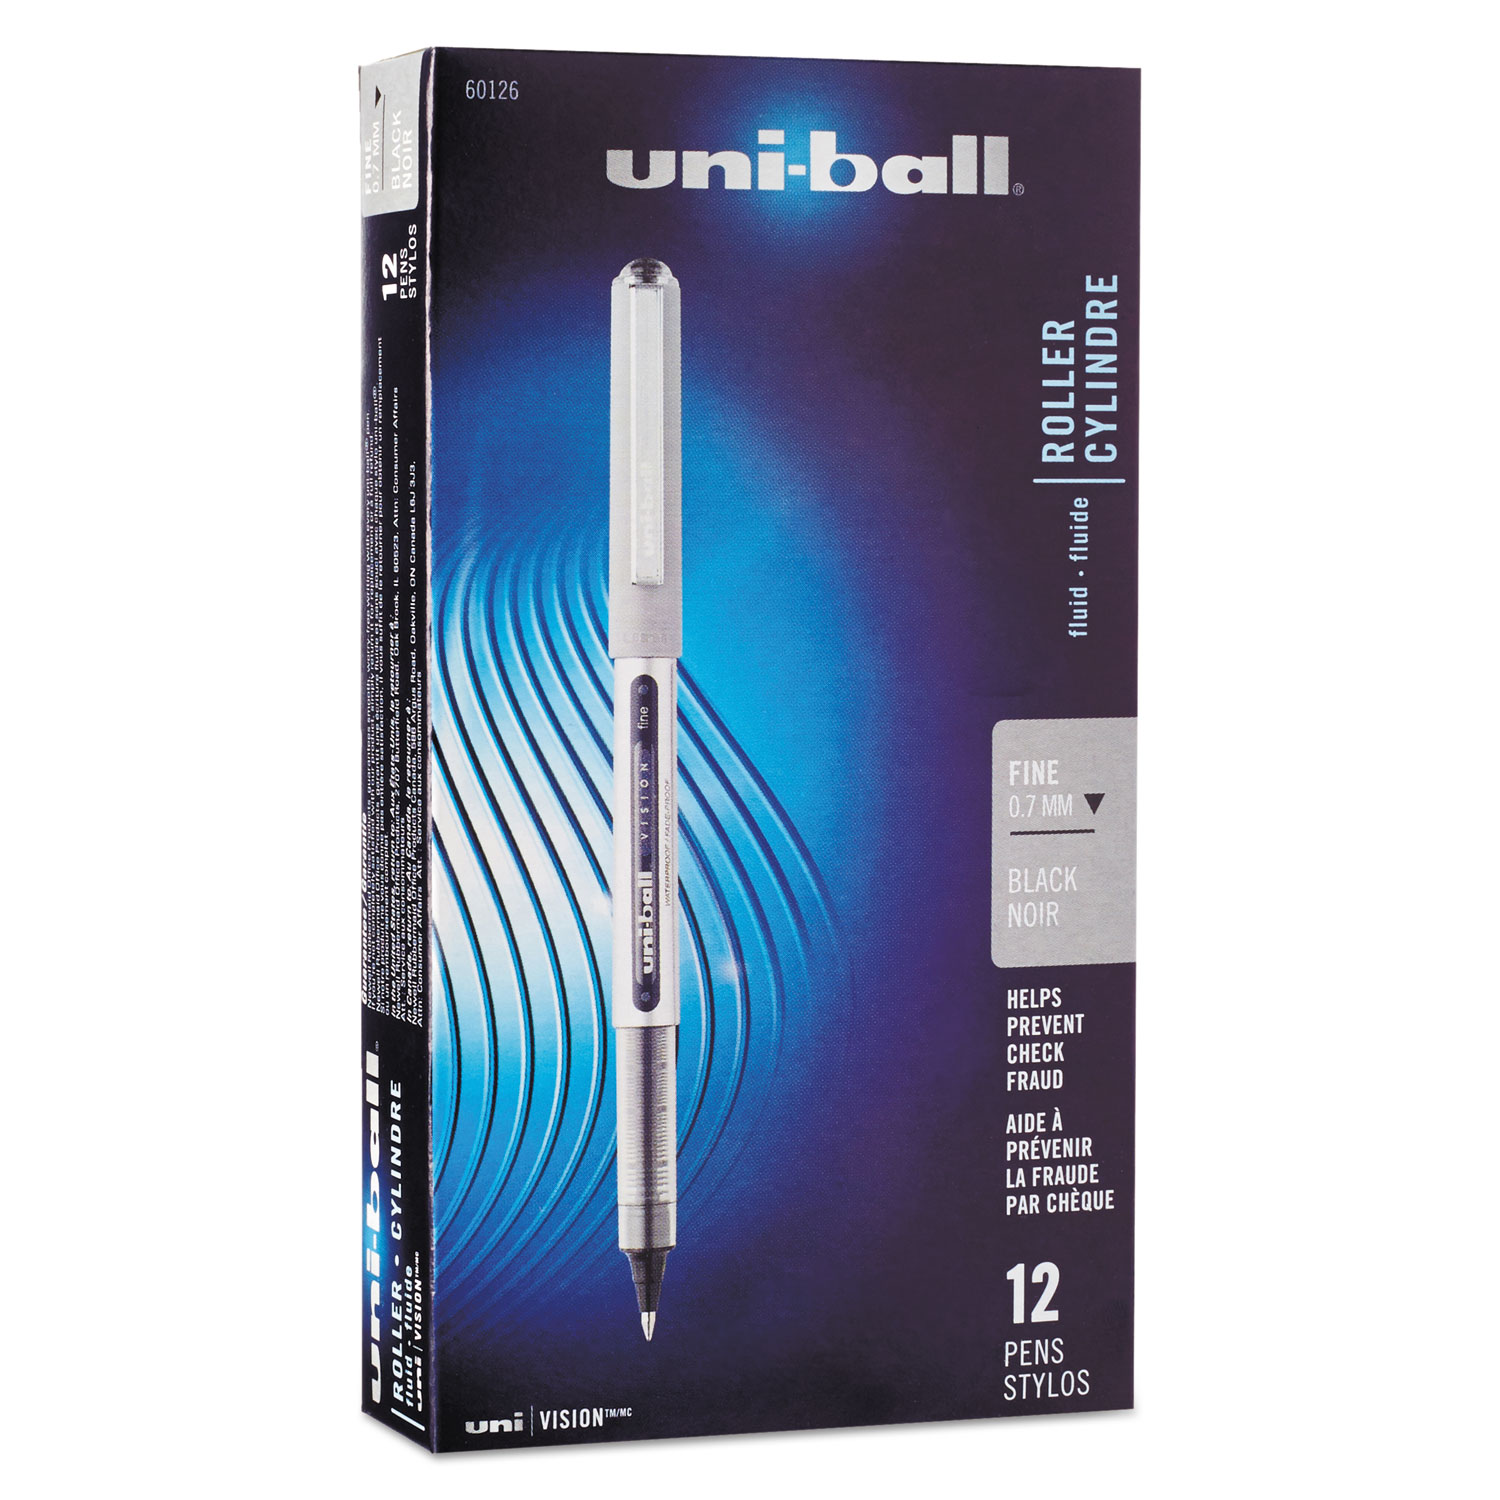  uni-ball 60126 VISION Stick Roller Ball Pen, Fine 0.7mm, Black Ink, Black/Gray Barrel, Dozen (UBC60126) 